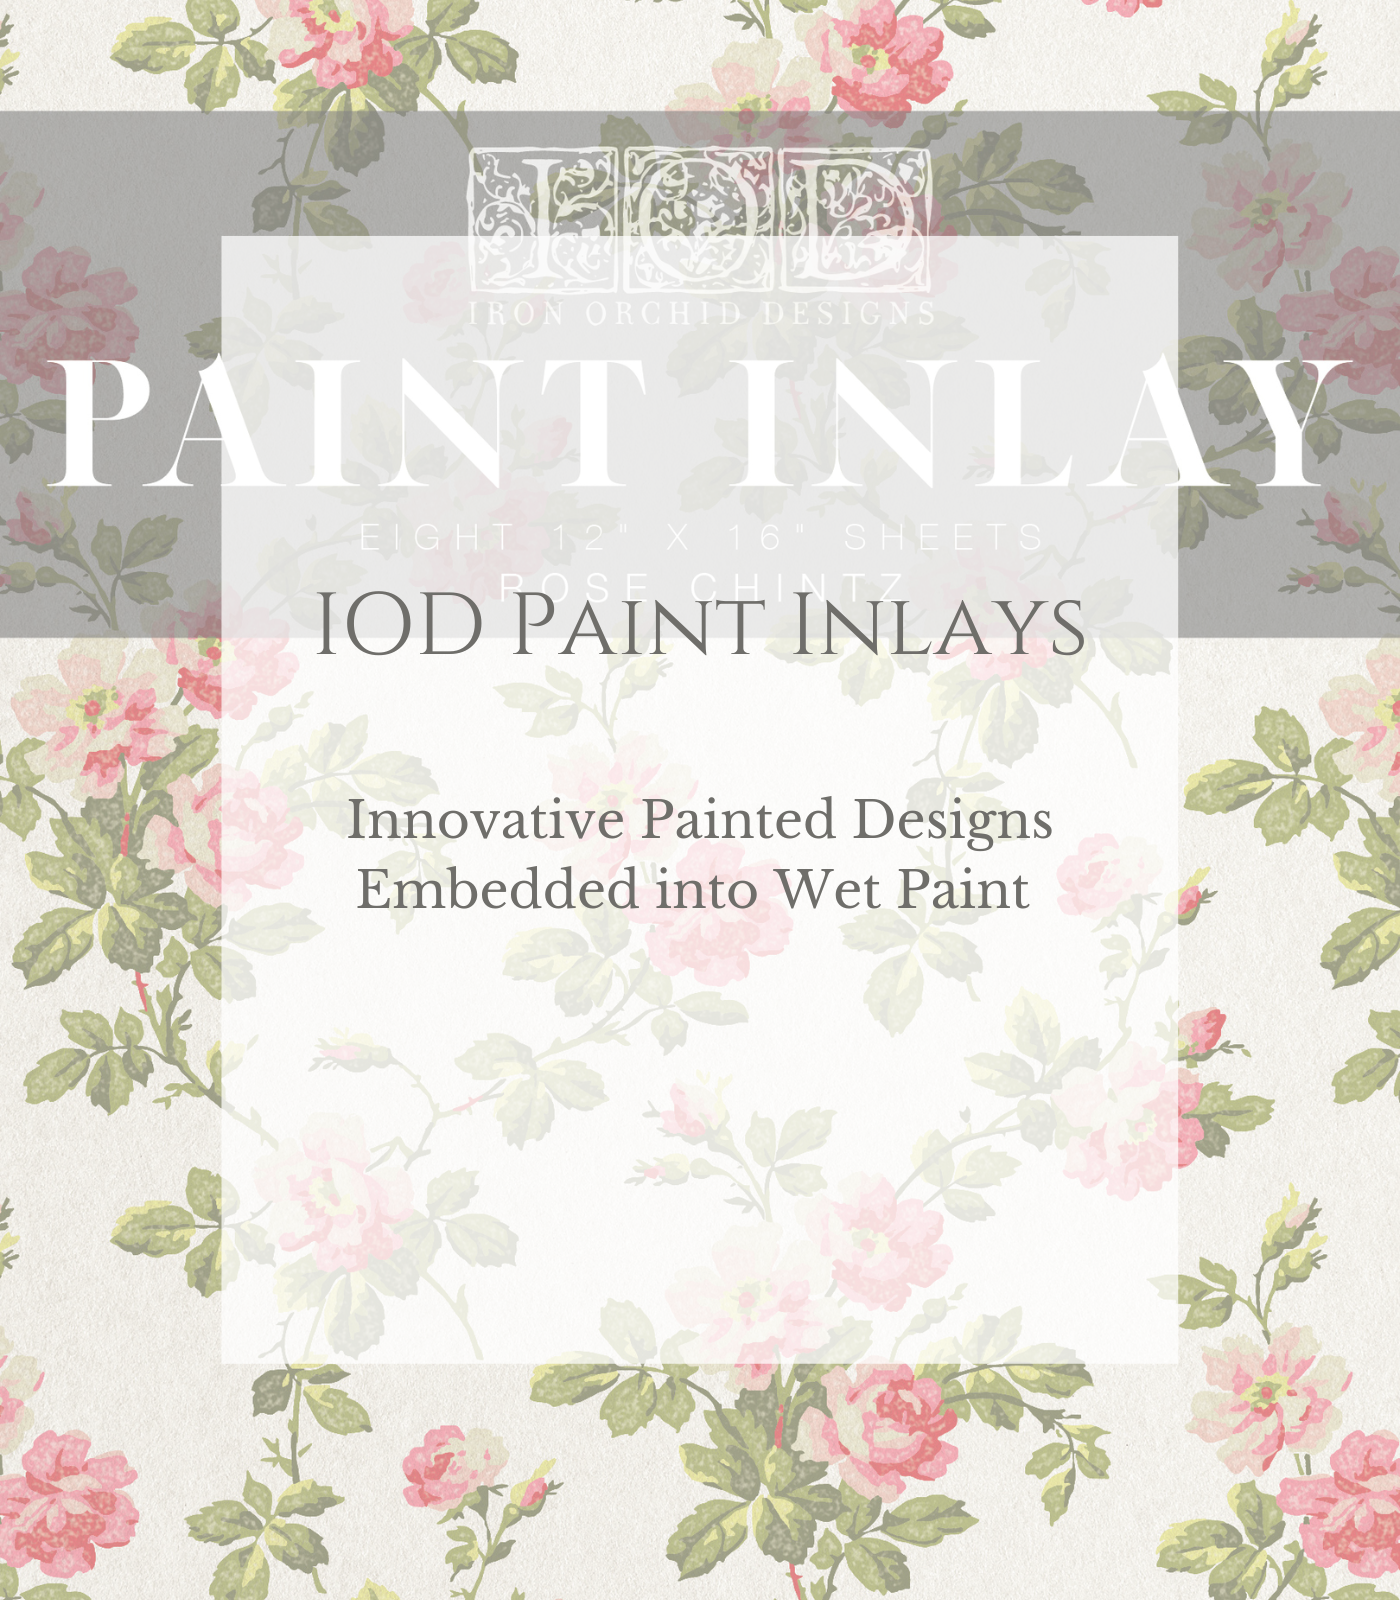 IOD Paint Inlays